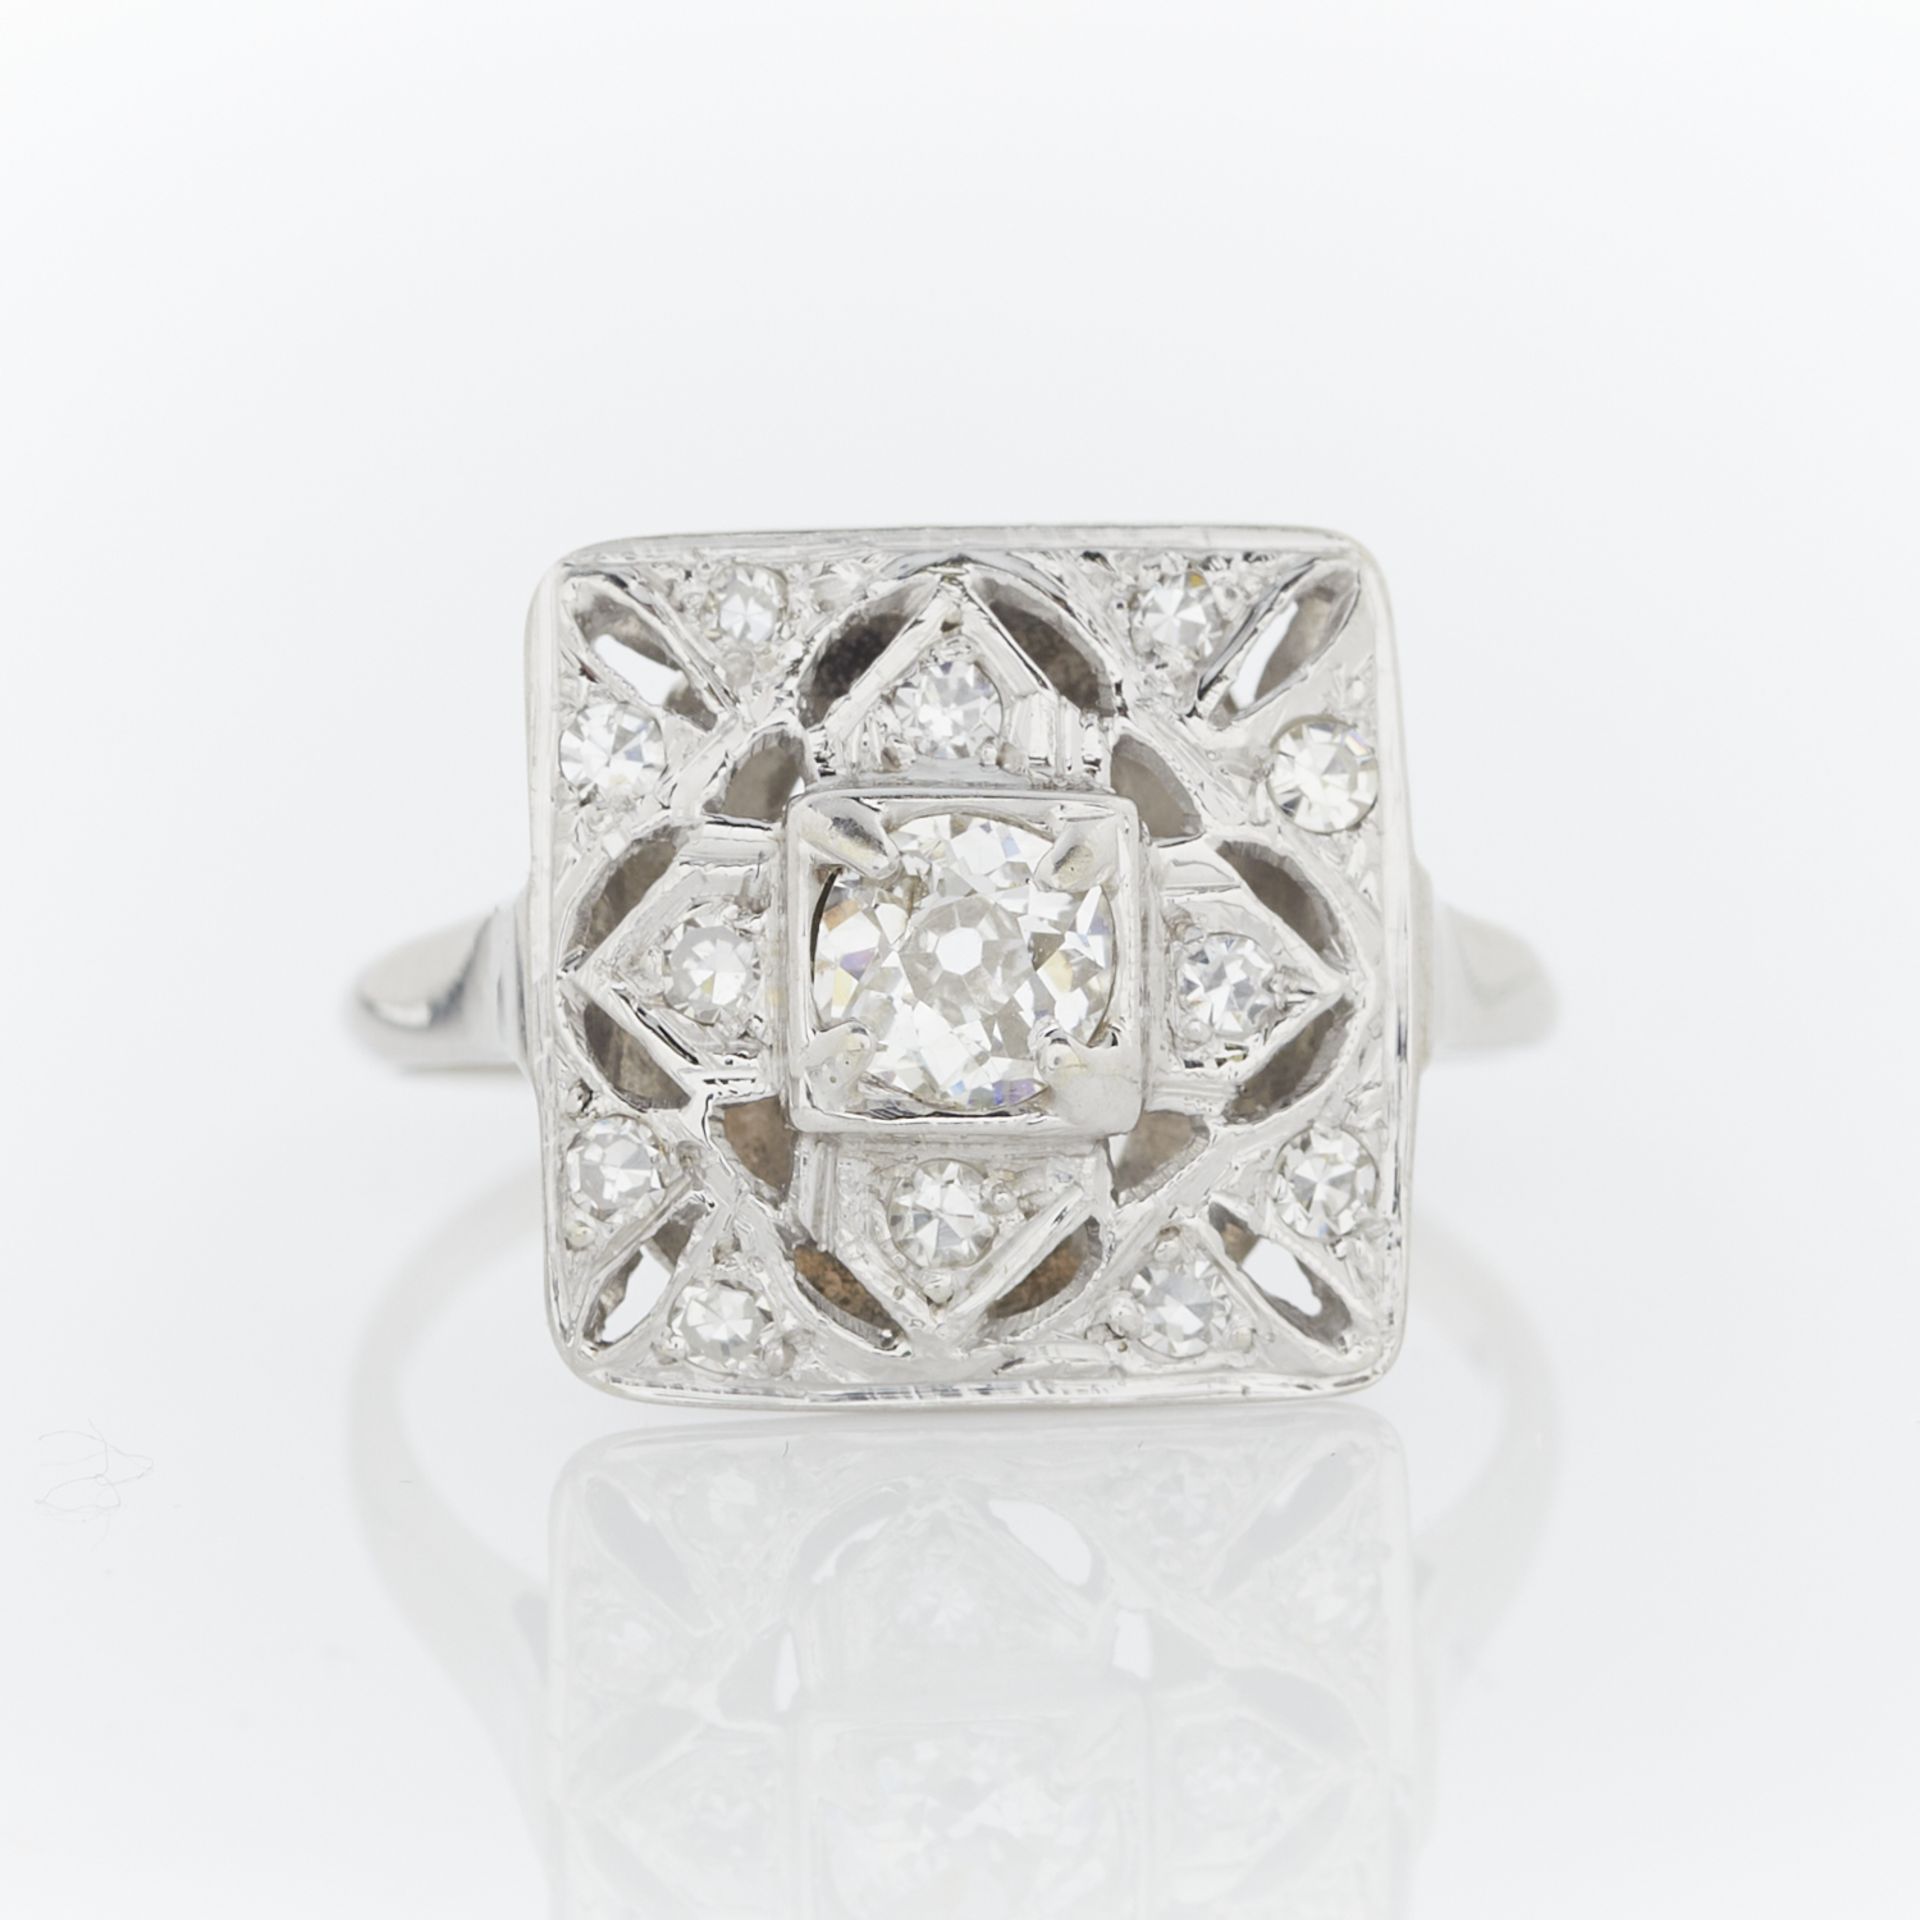 14k White Gold Art Deco Style Ring - Image 4 of 11